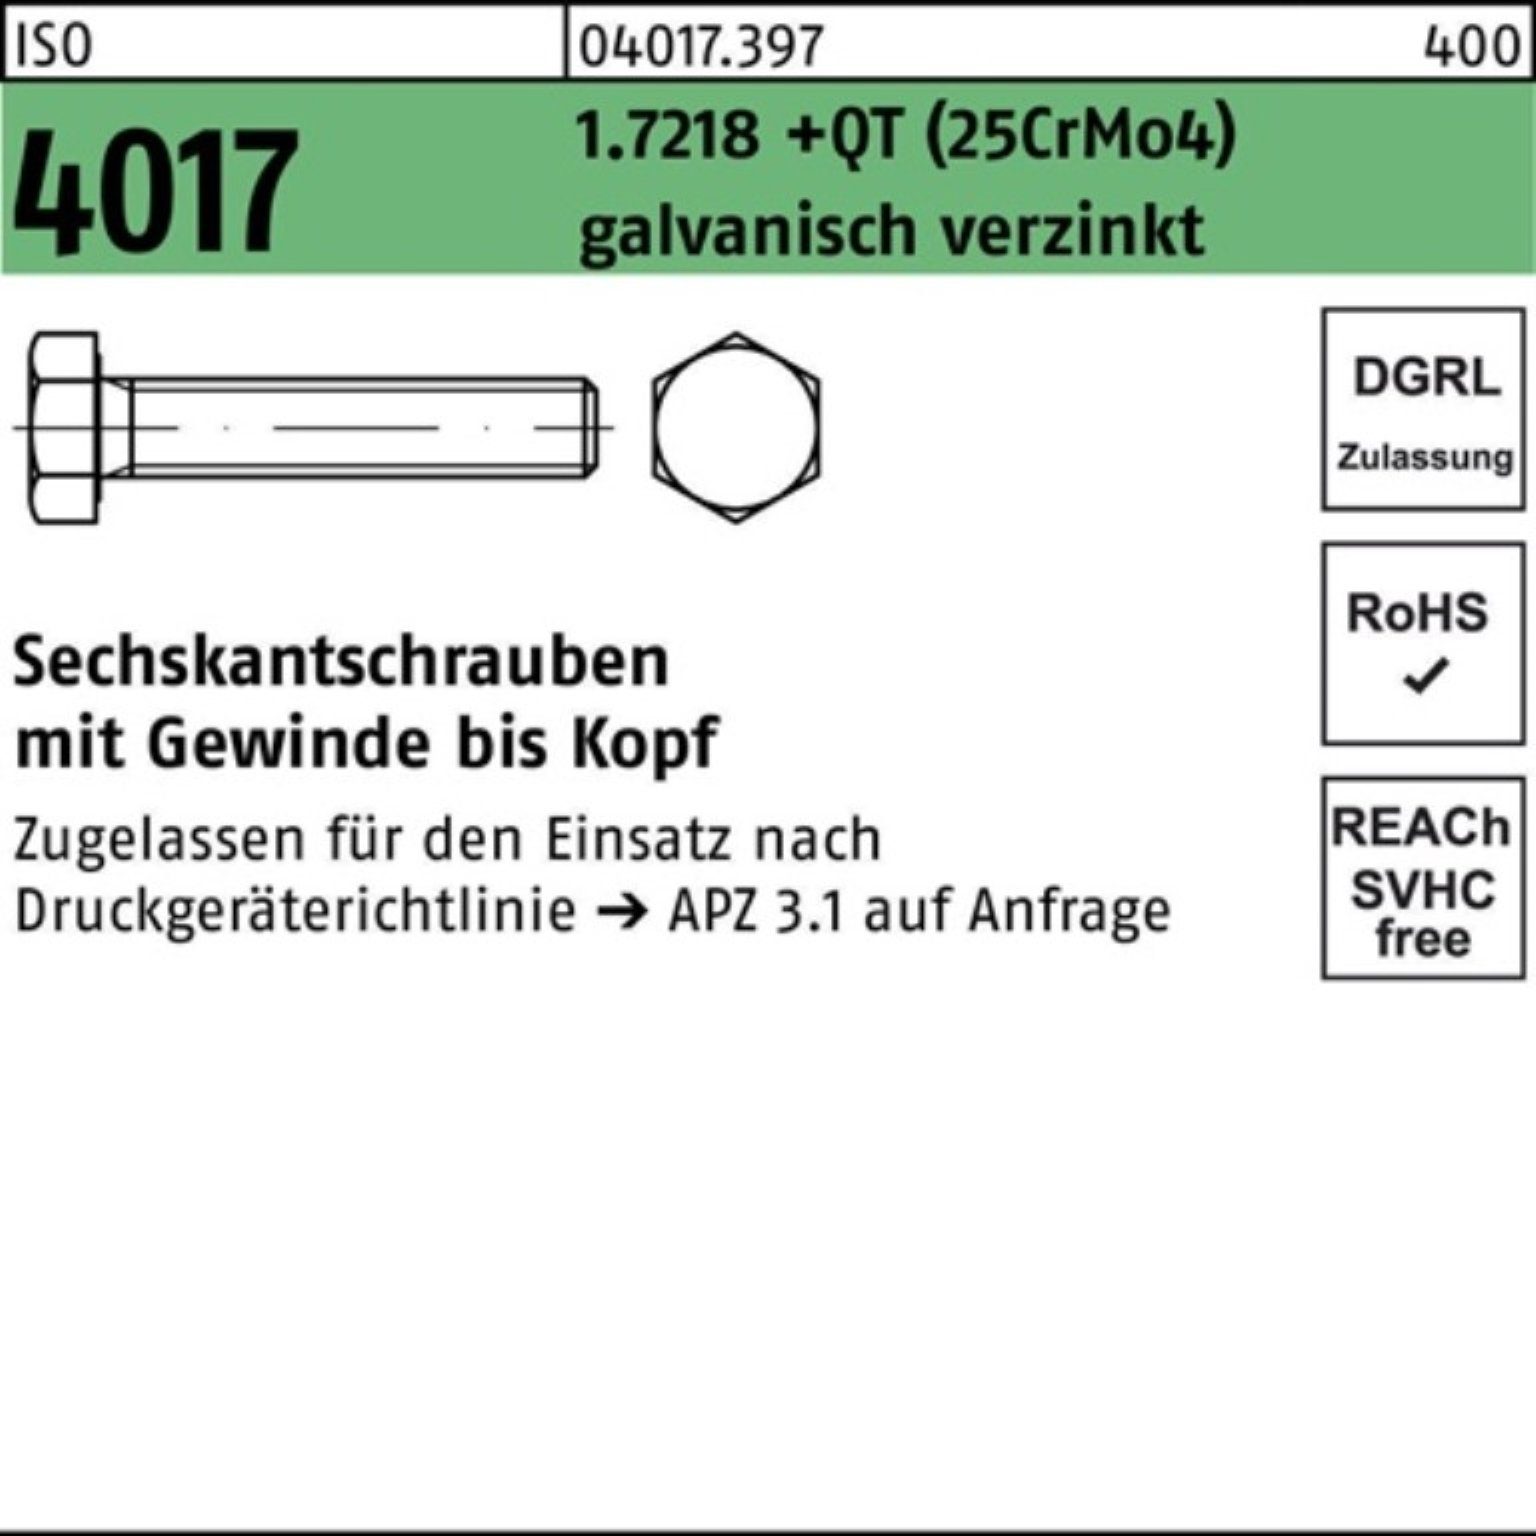 Bufab Pack ISO Sechskantschraube +QT 4017 1.7218 M30x100 (25CrMo4) 100er VG Sechskantschraube